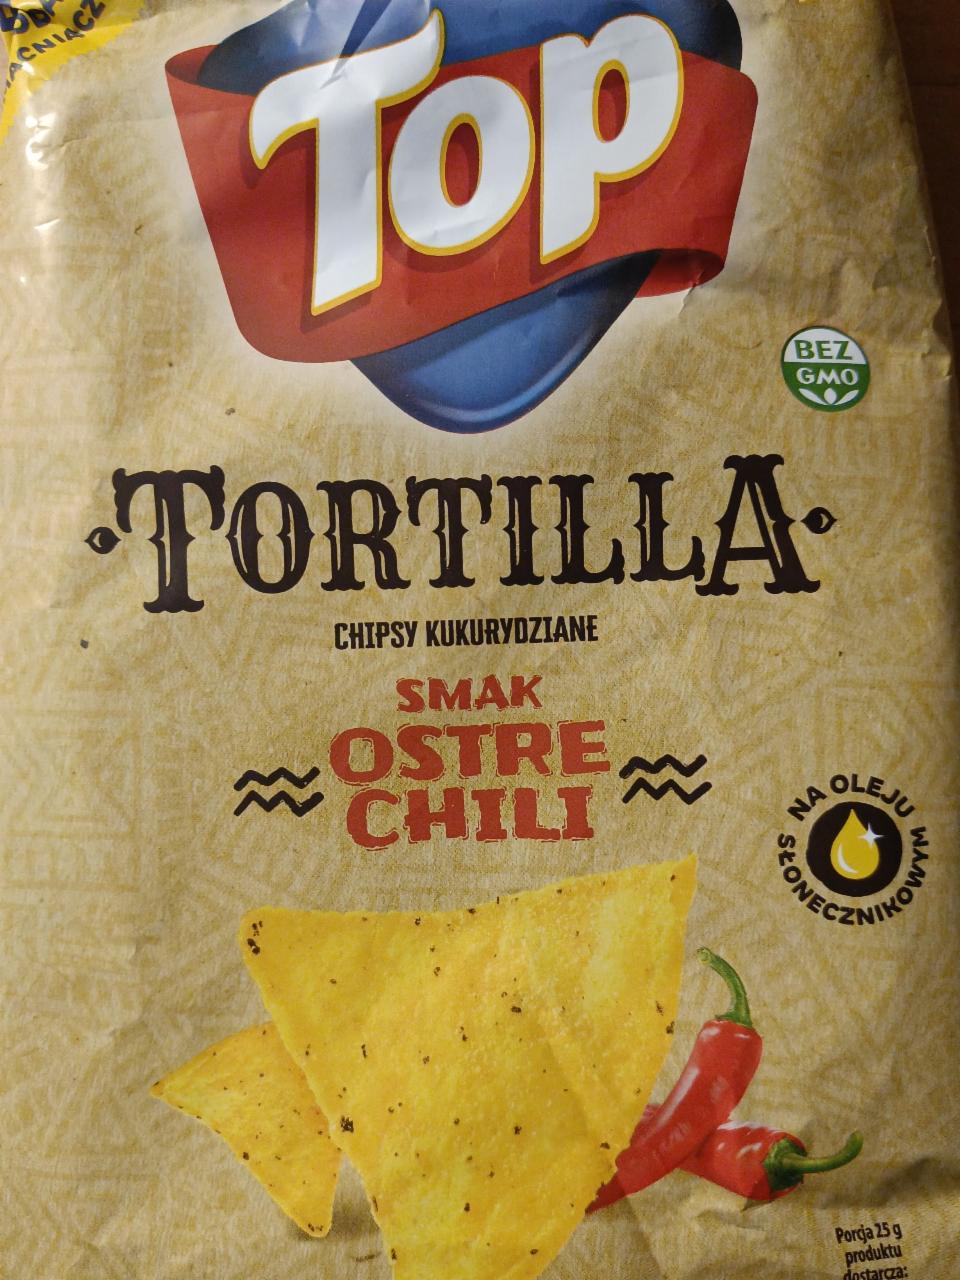 Zdjęcia - Tortilla chipsy kukurydziane smak ostre chili TOP